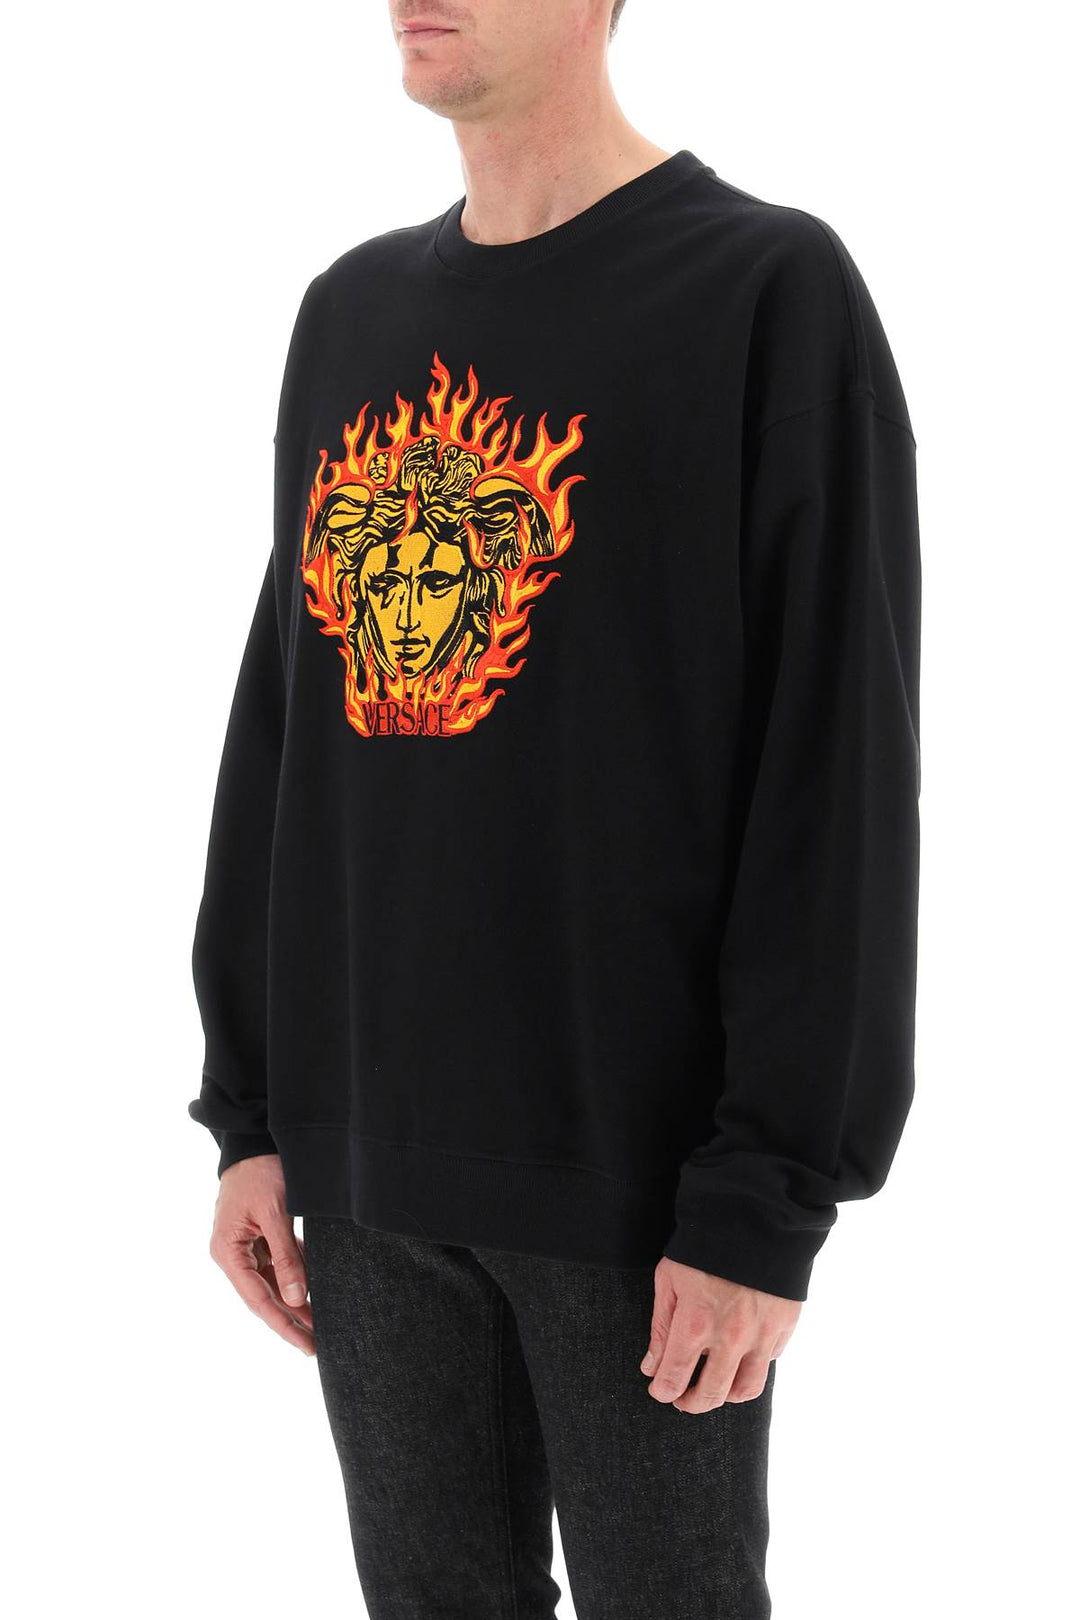 Versace Medusa Flame Sweatshirt   Nero